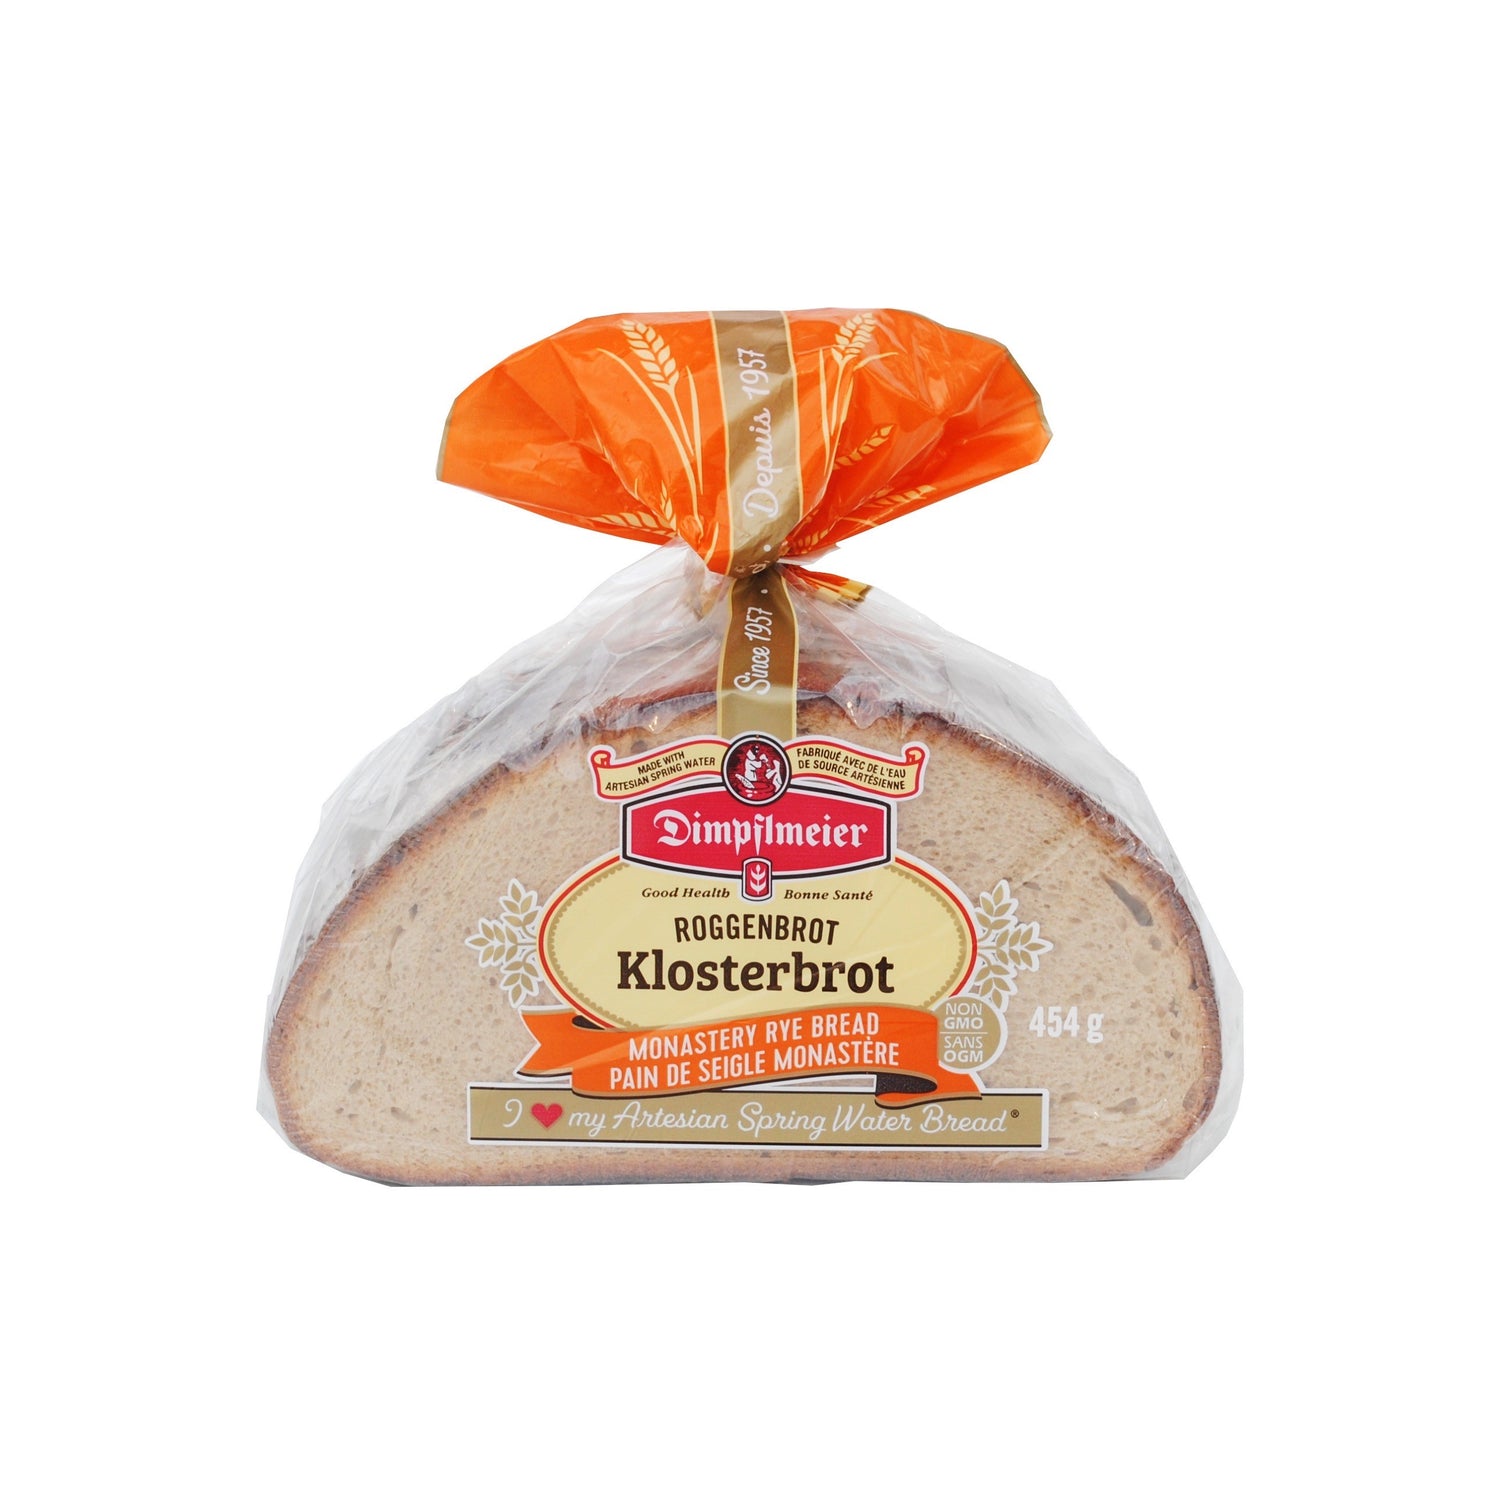 Klosterbrot- Monastery Rye Bread